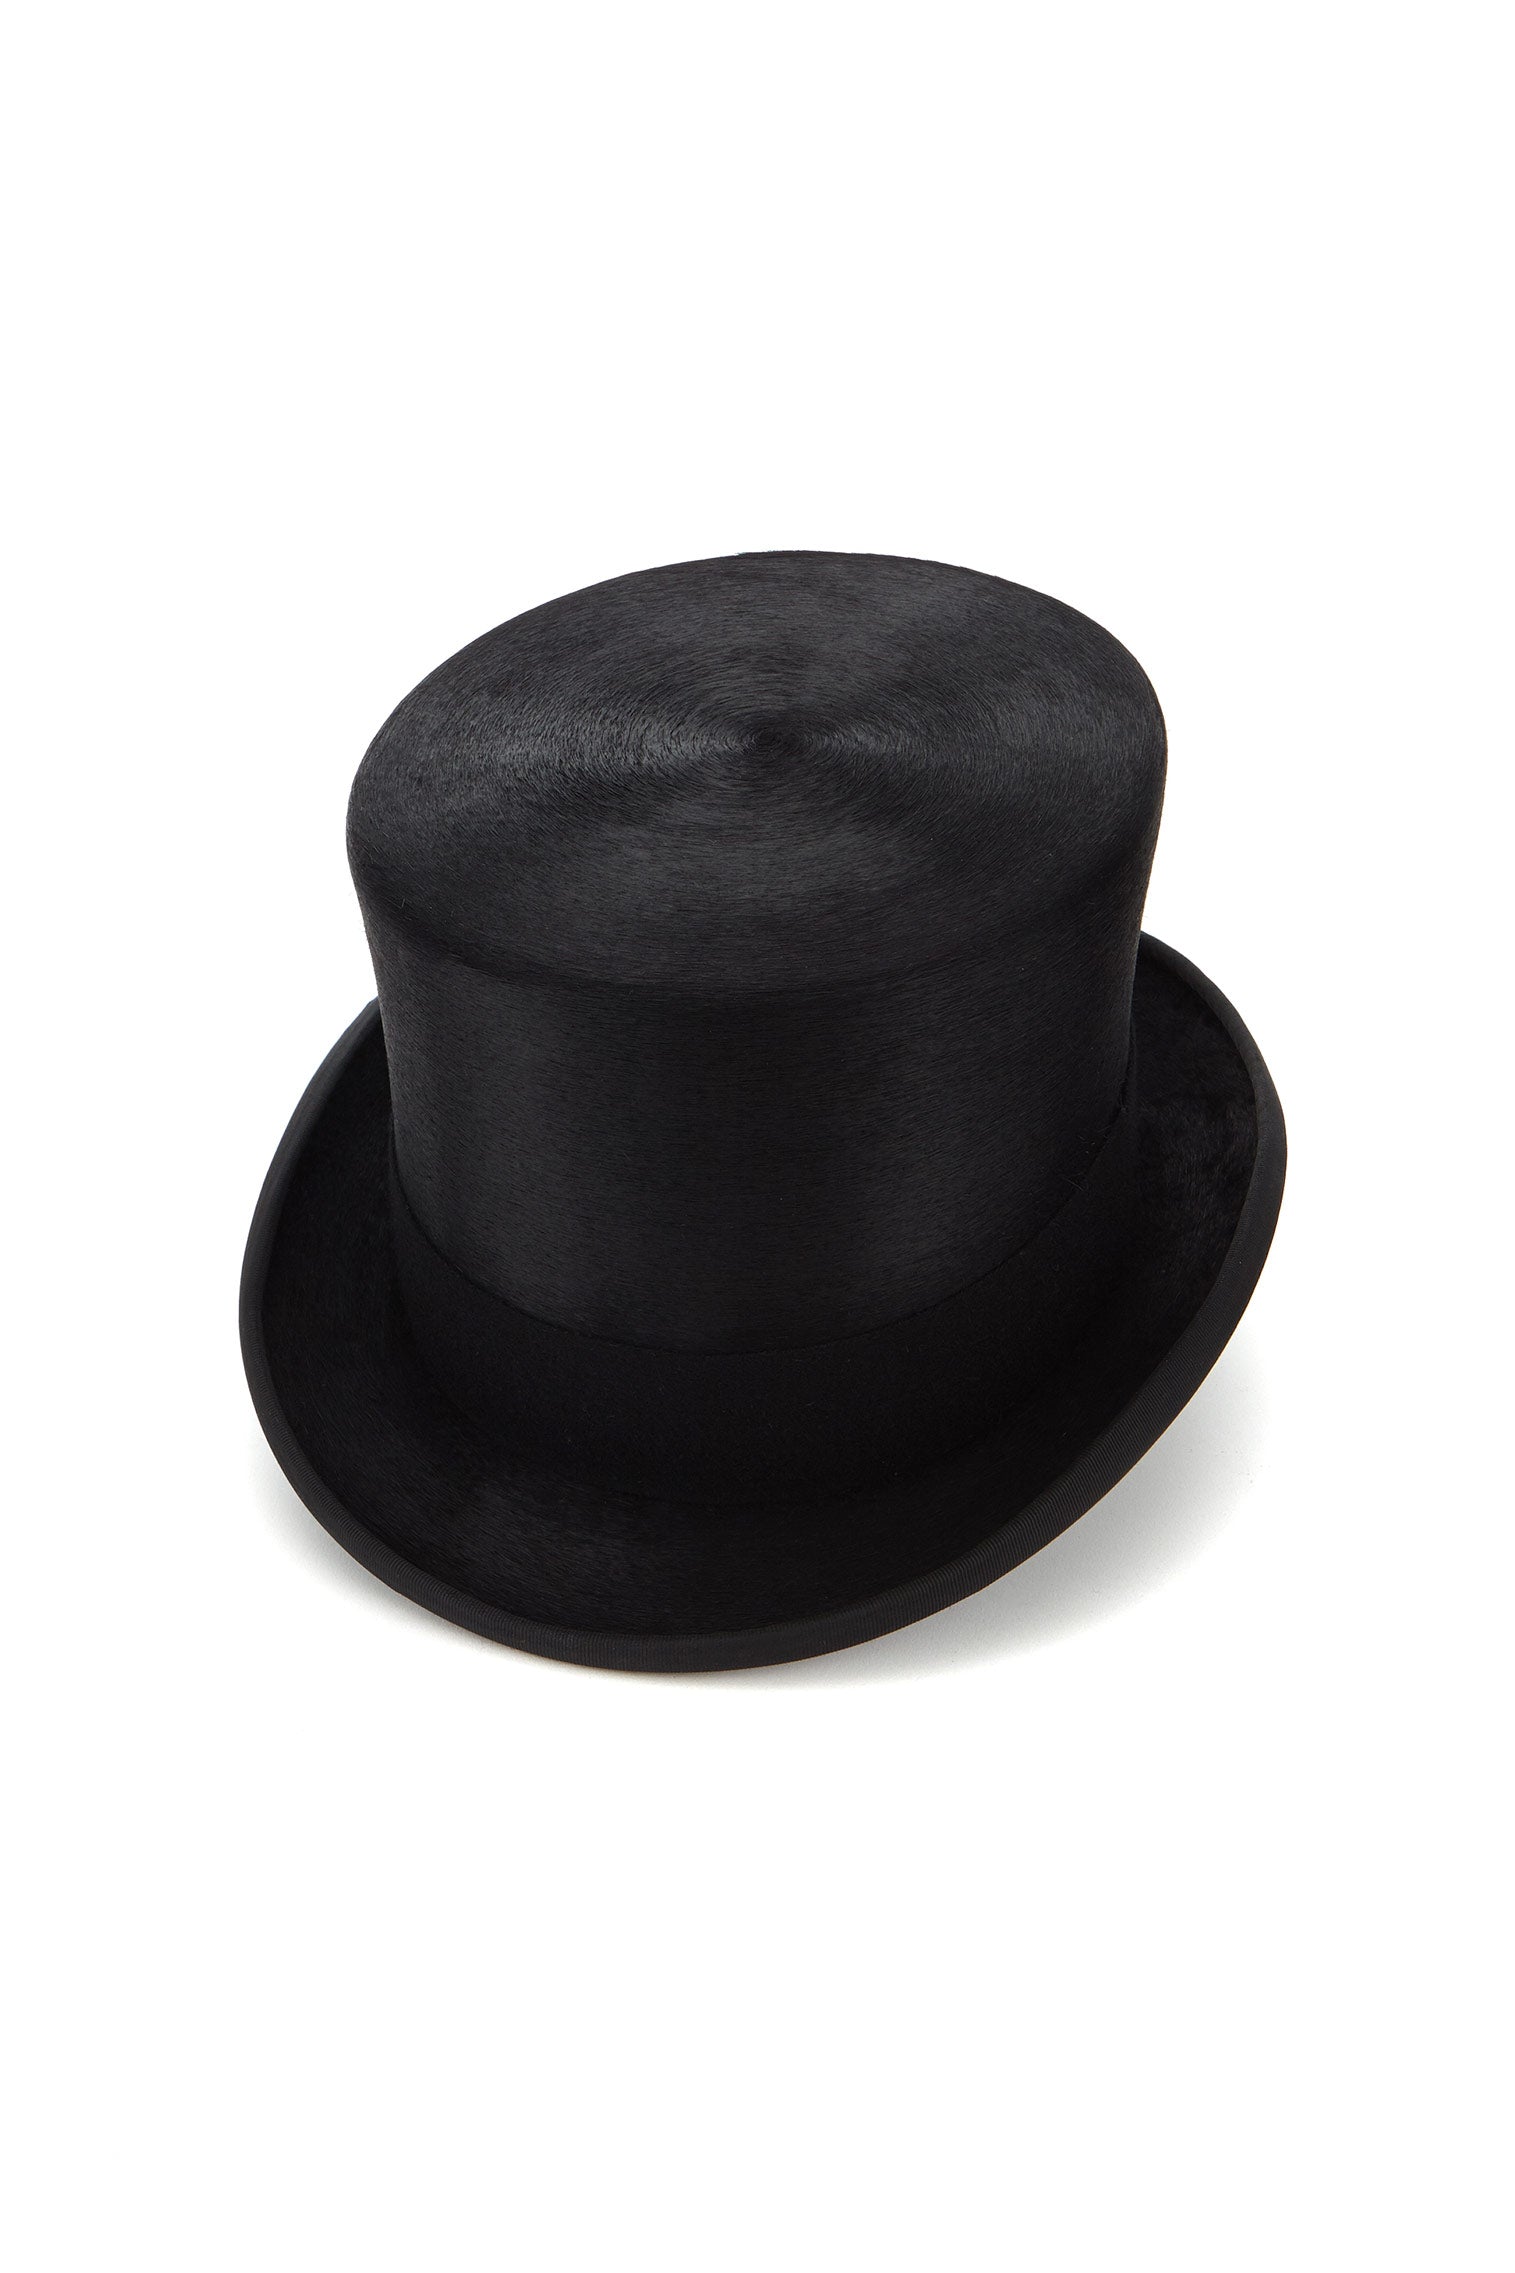 Westminster Top Hat - Top Hats - Lock & Co. Hatters London UK